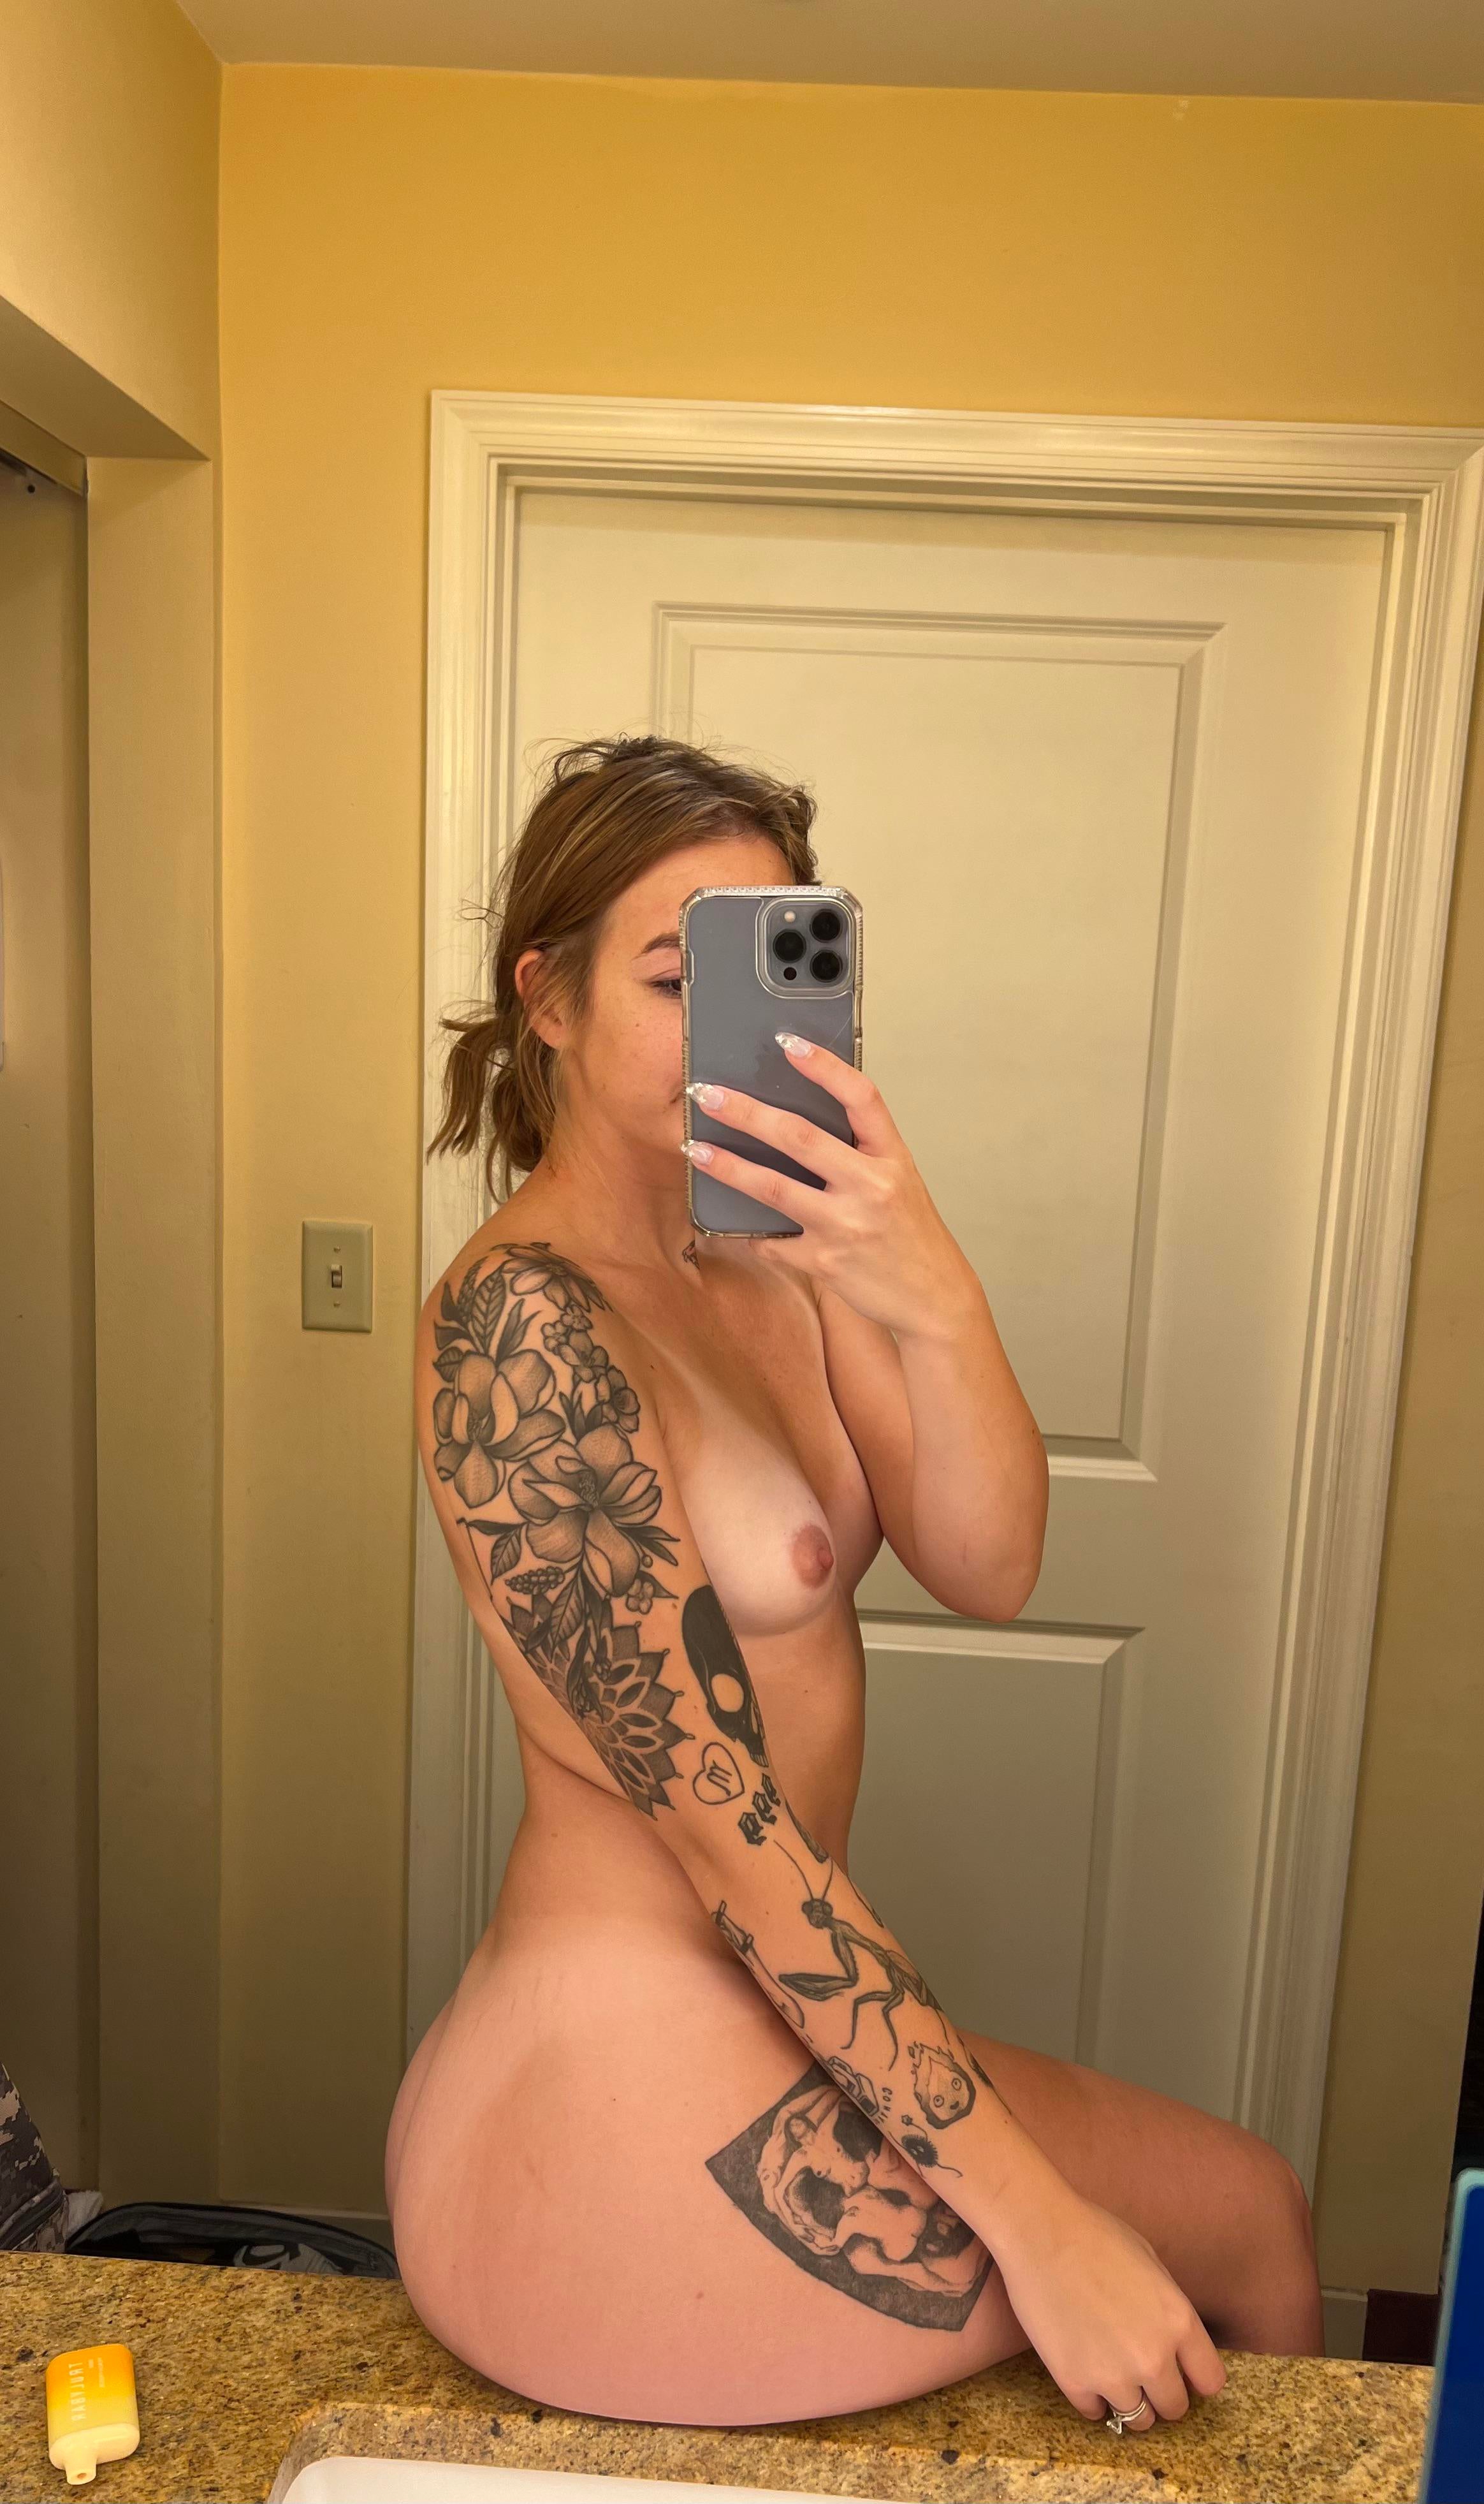 Post sex hair 🤤 &#8211; Naked Girls | Nude Women